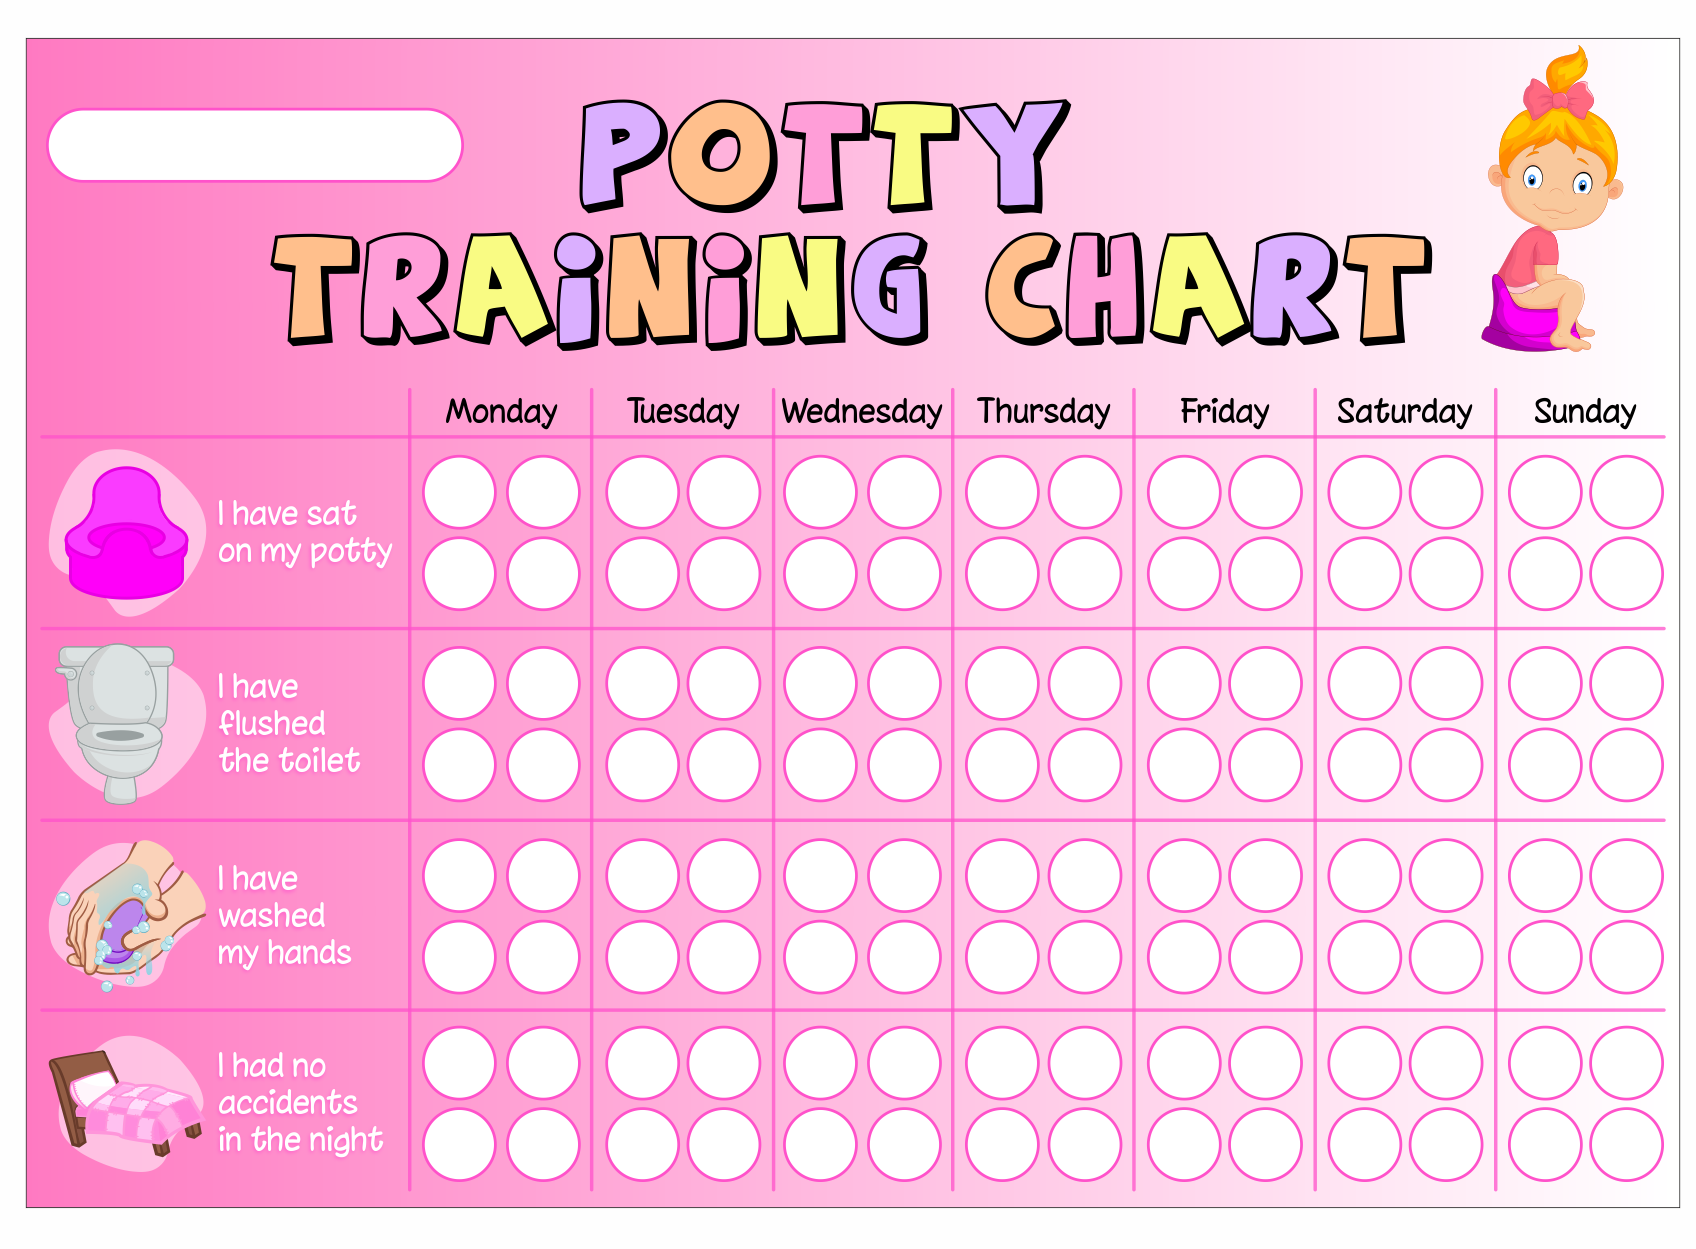 Potty Training Success Chart